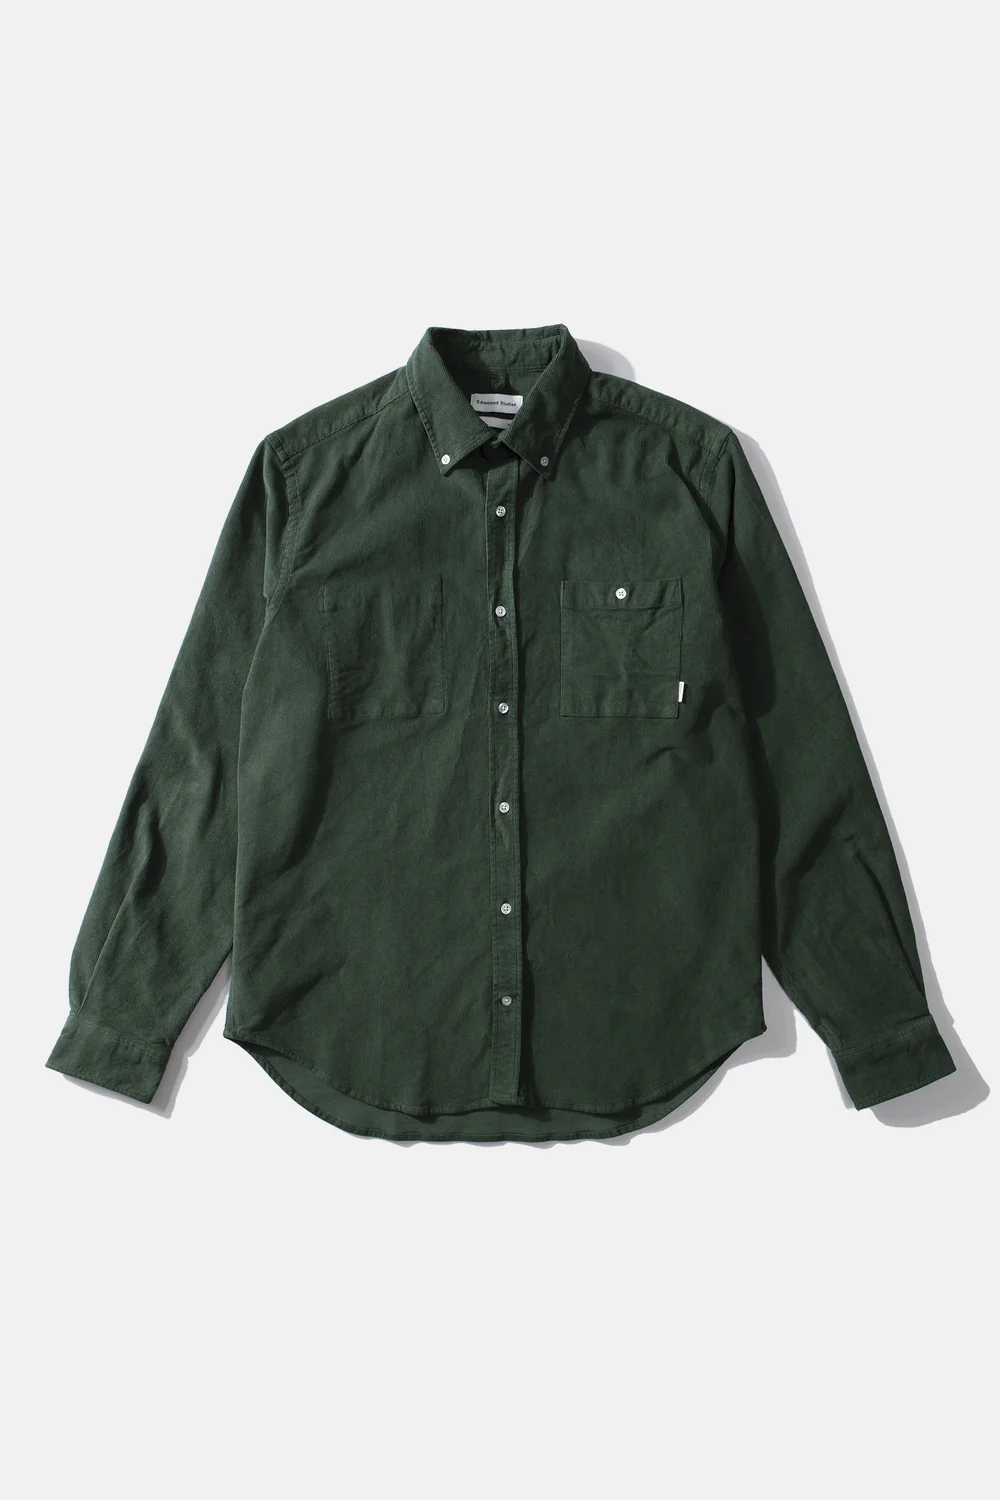 EDMMOND STUDIOS Pocket Cord Shirt - Green